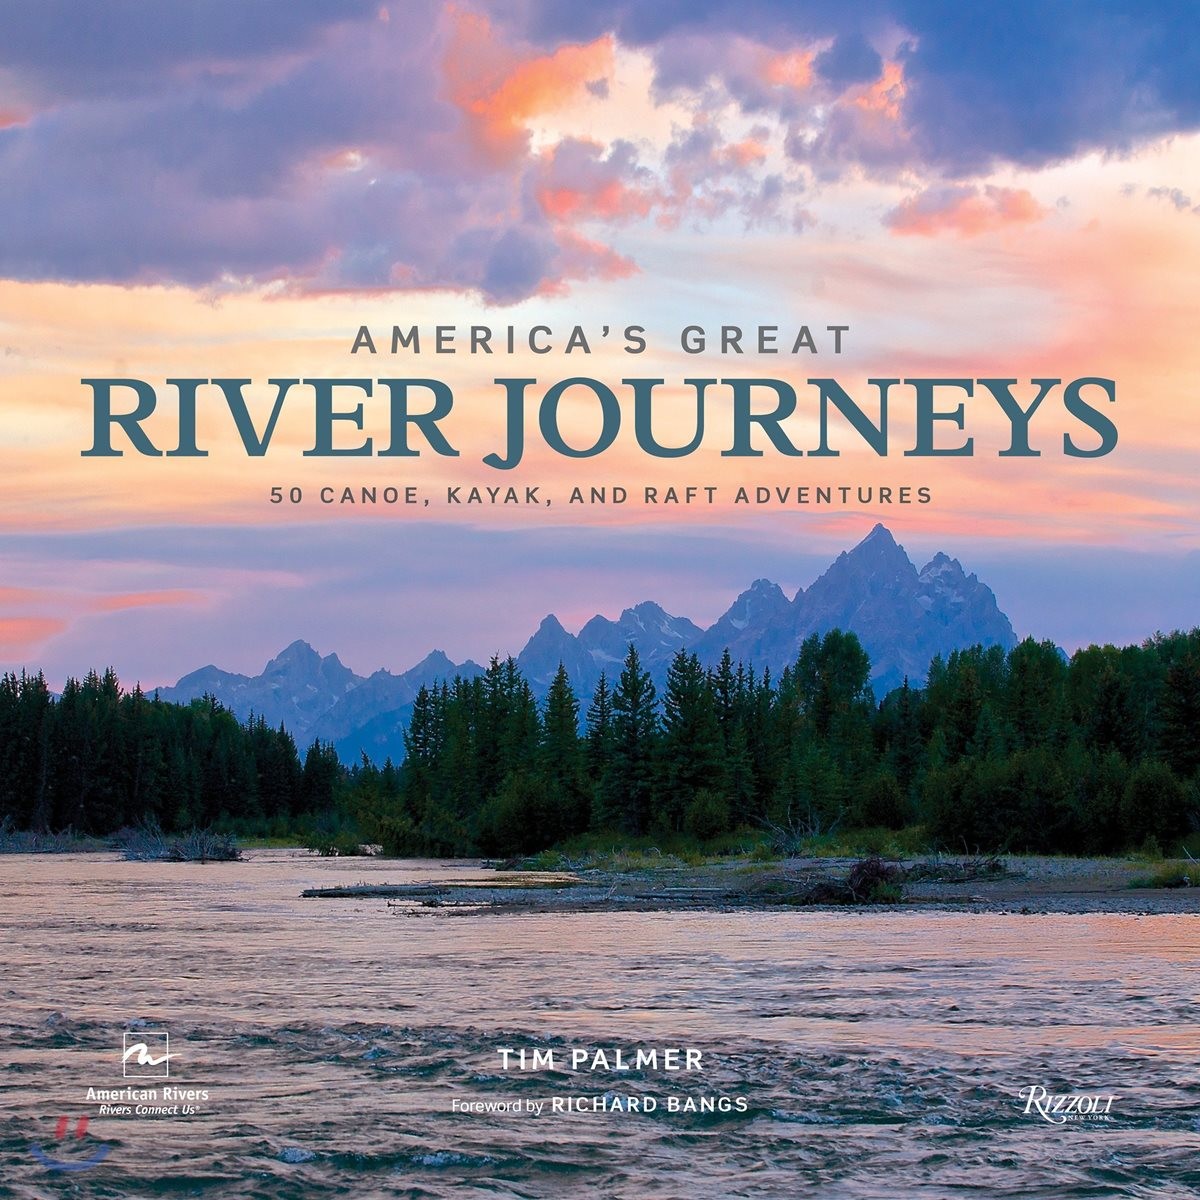 America’s Great River Journeys (50 Canoe, Kayak, and Raft Adventures)